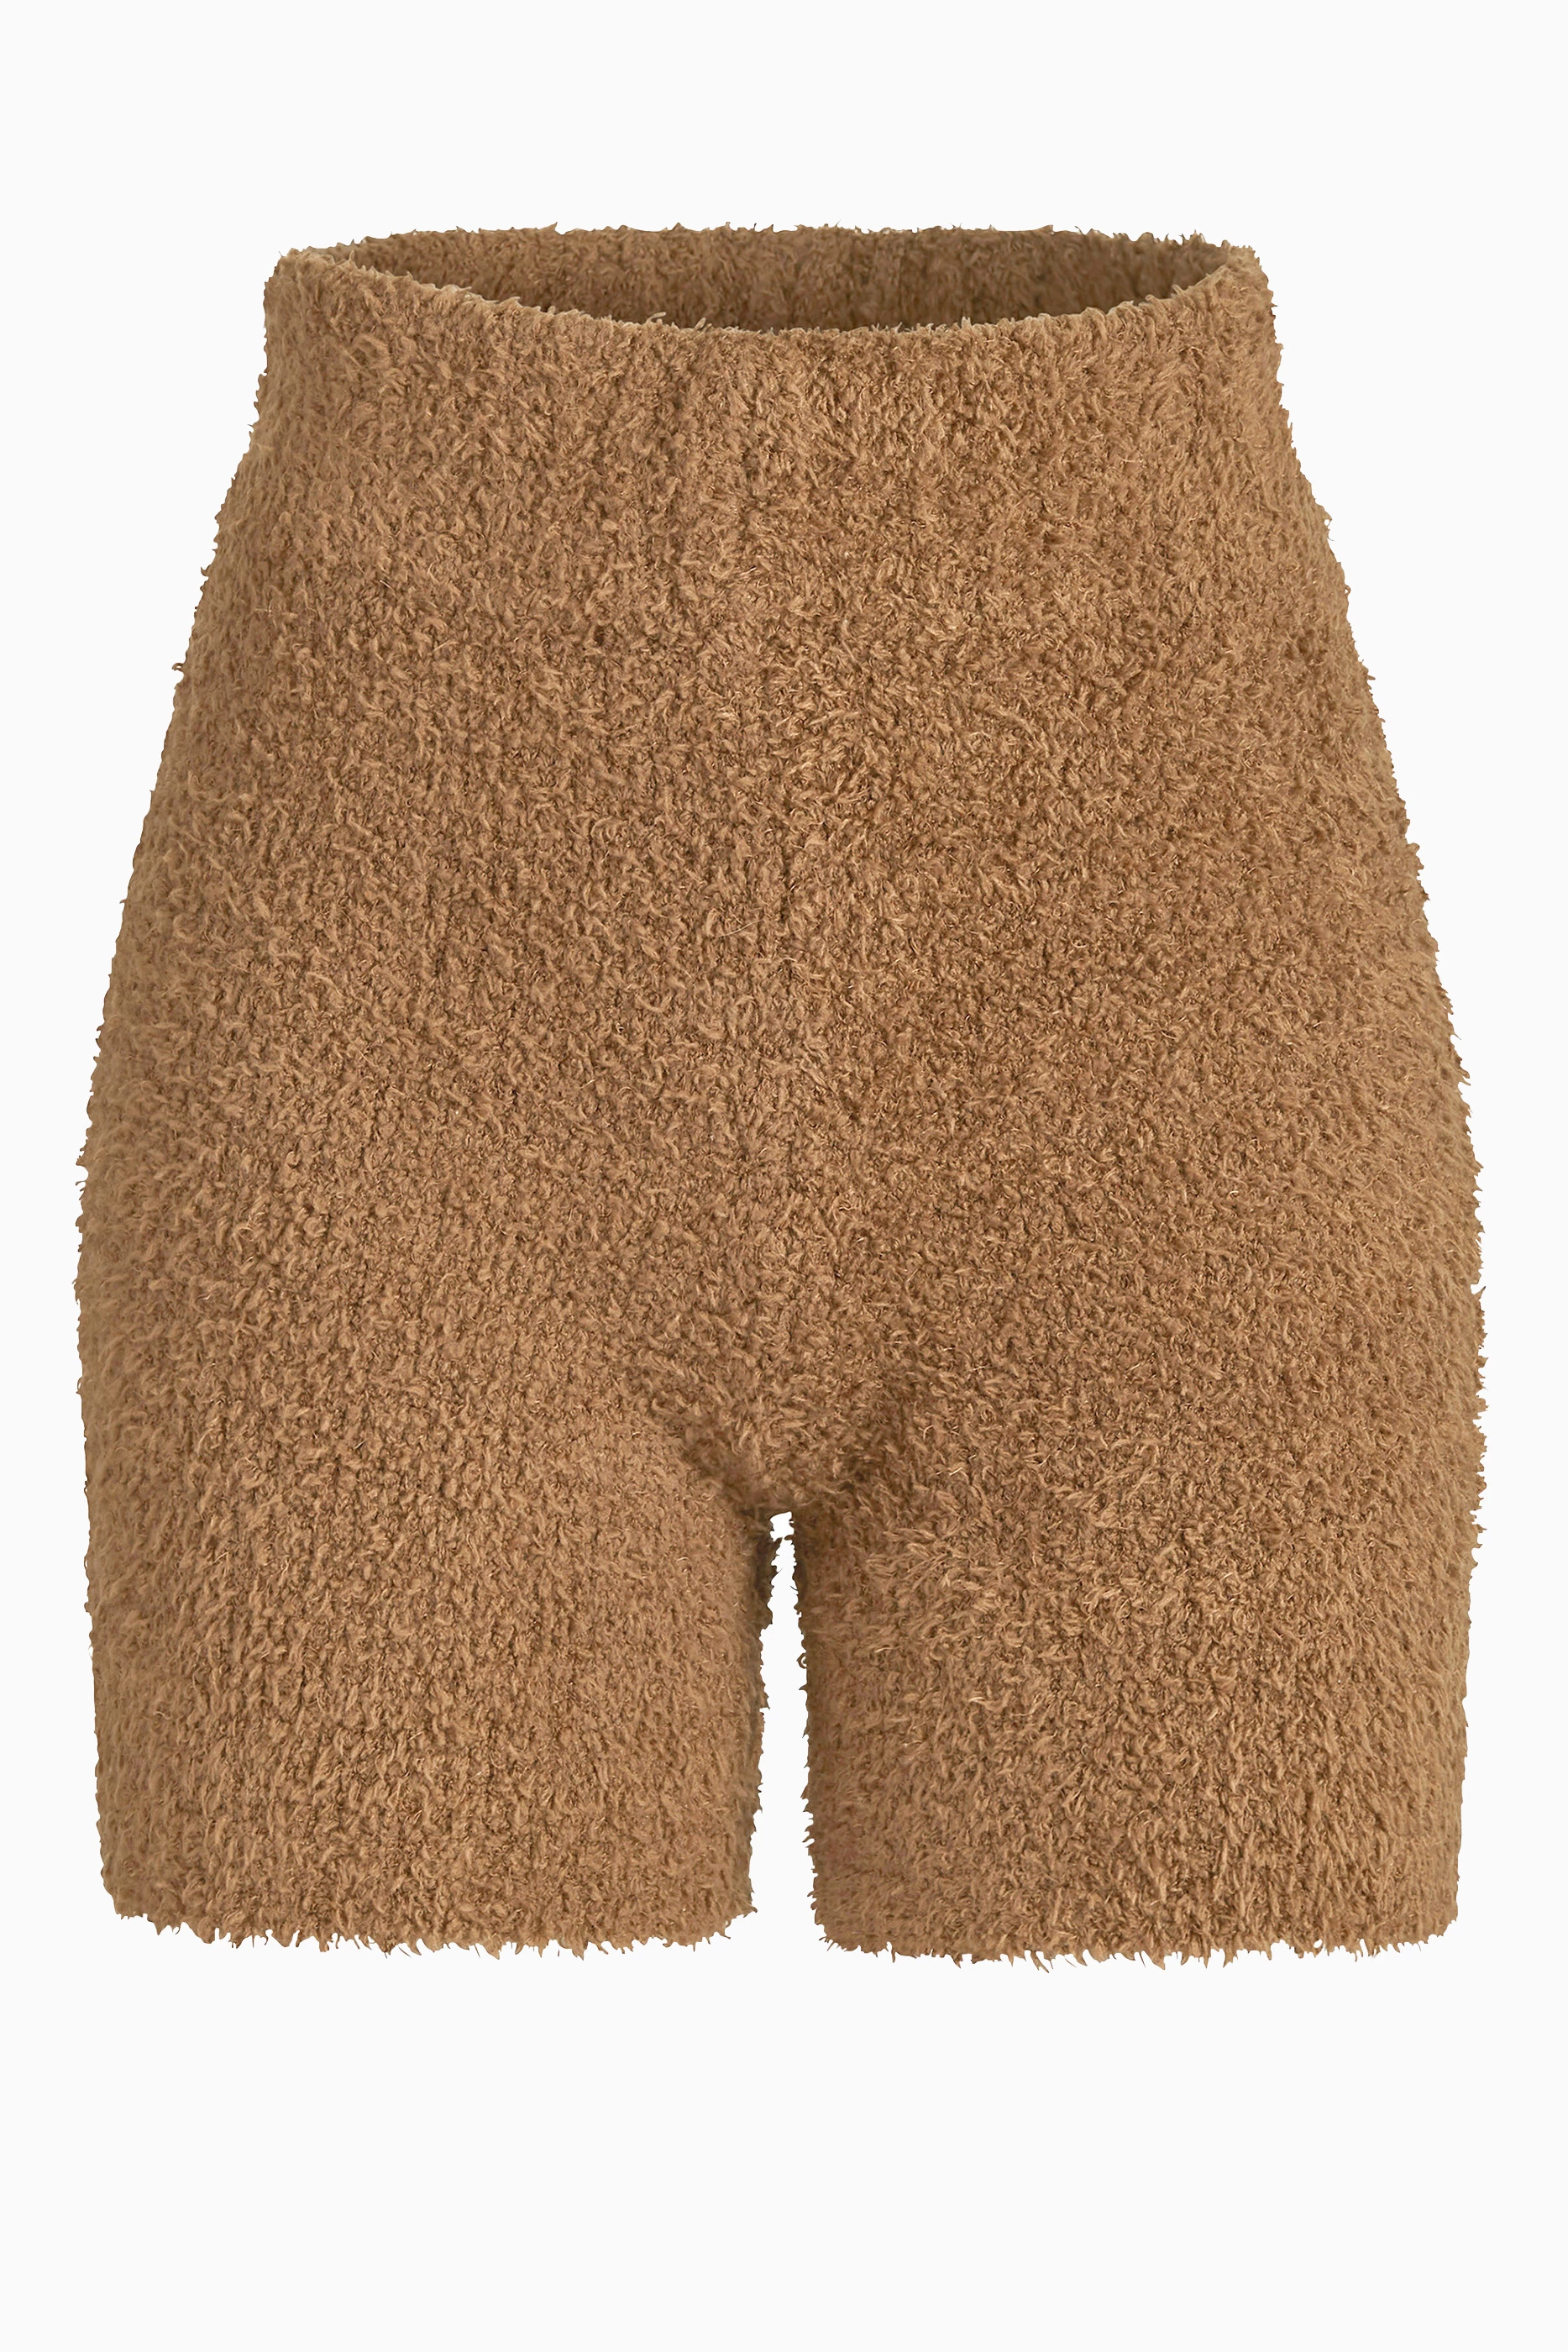 Skims Cozy Knit Shorts Brown Stretch Fuzzy Boucle Yarn Lounge Sz S / M